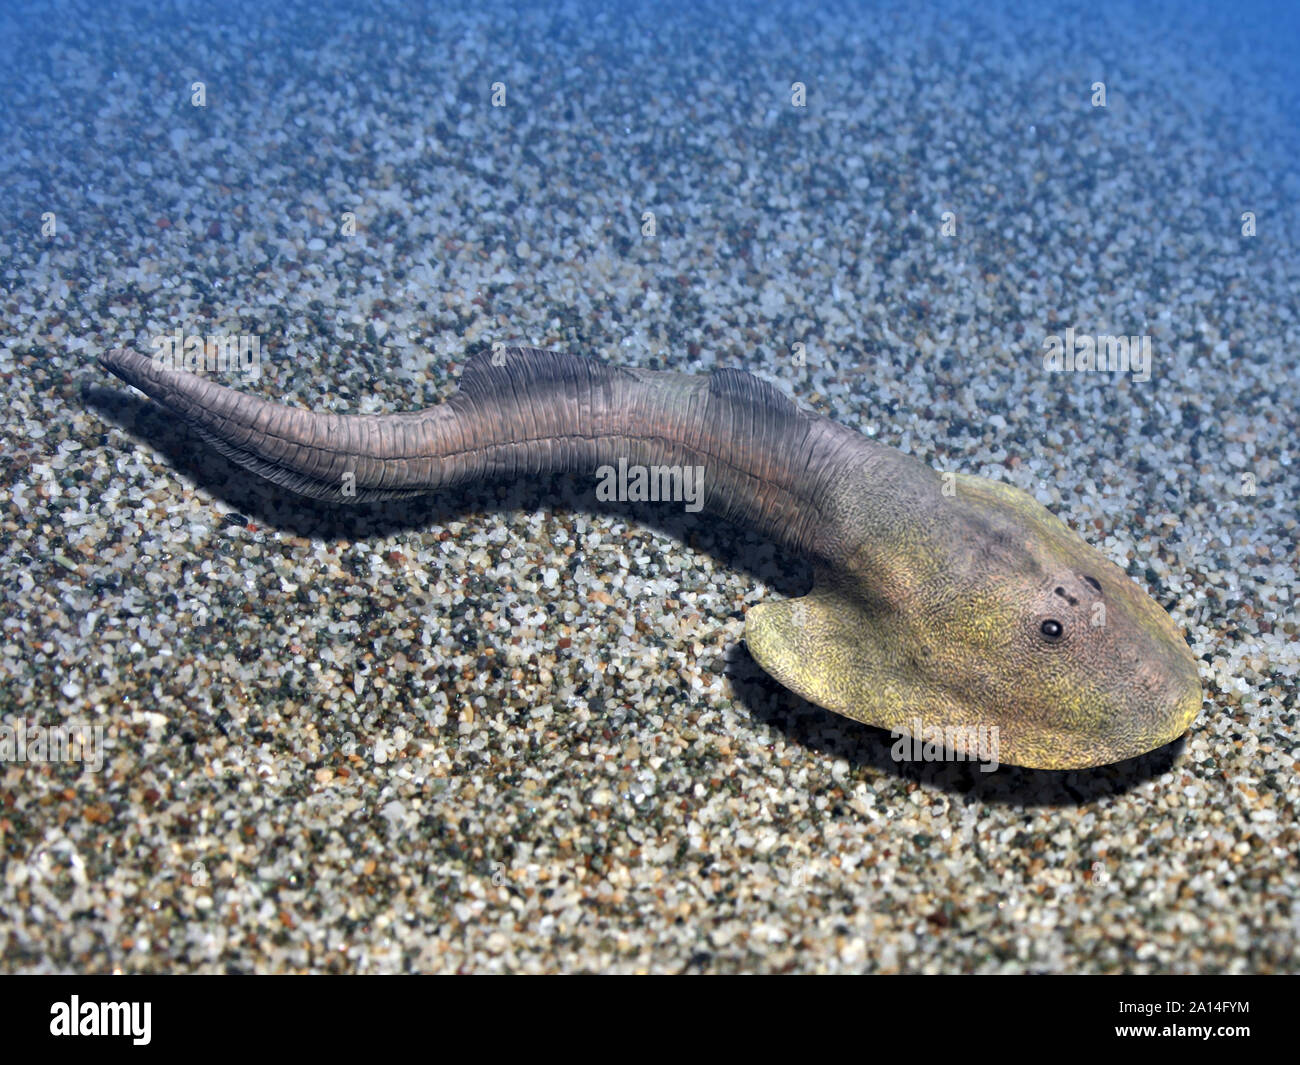 Ateleaspis tesselata swimming on the sandy bottom. Stock Photo